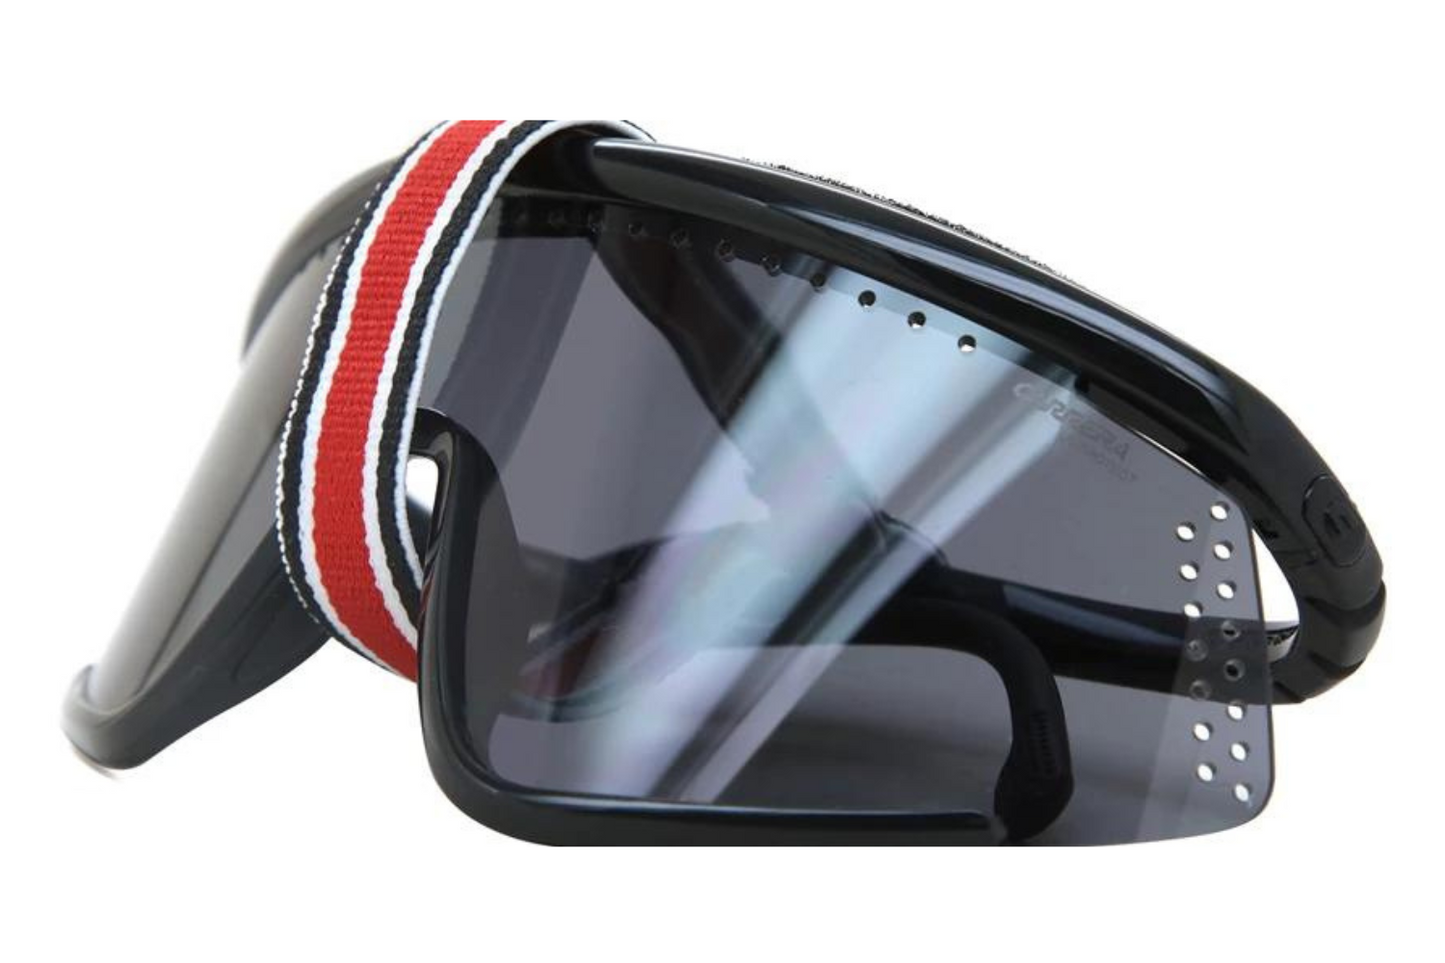 Carrera Sunglasses HYPERFIT 10/S